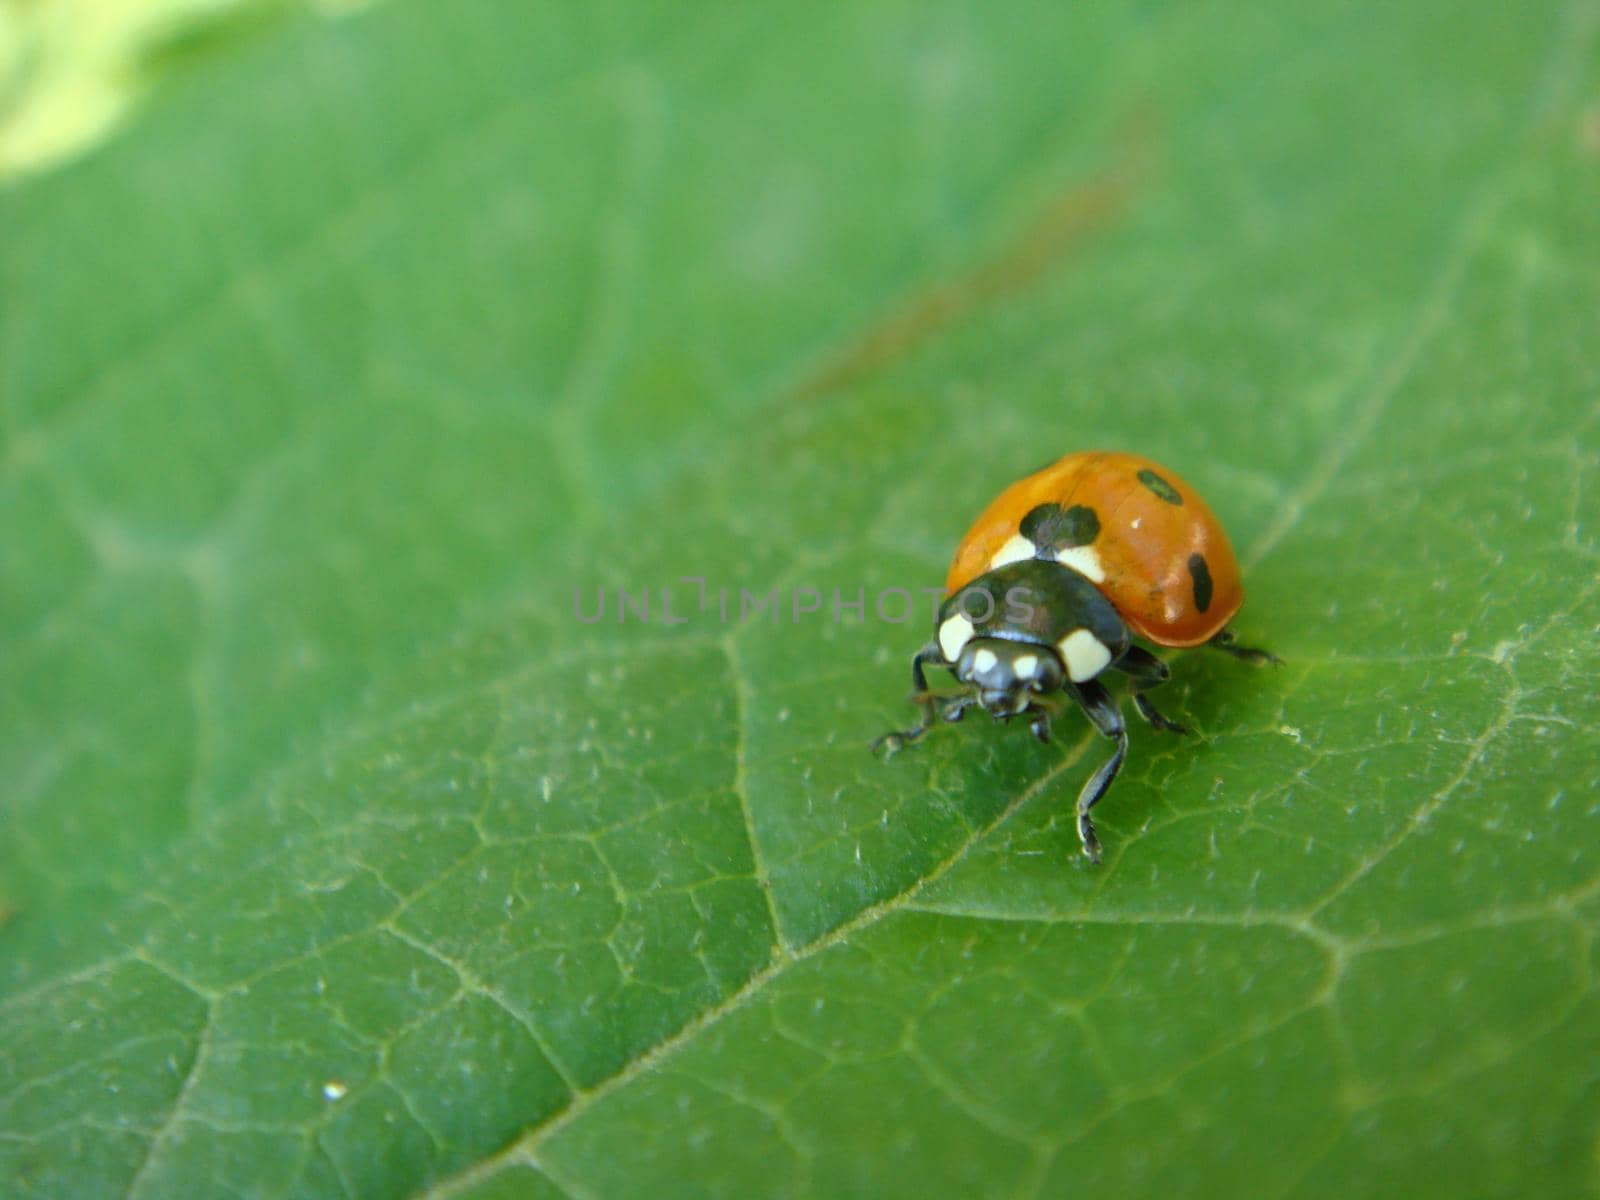 Ladybug on the green leaf, macro shot .